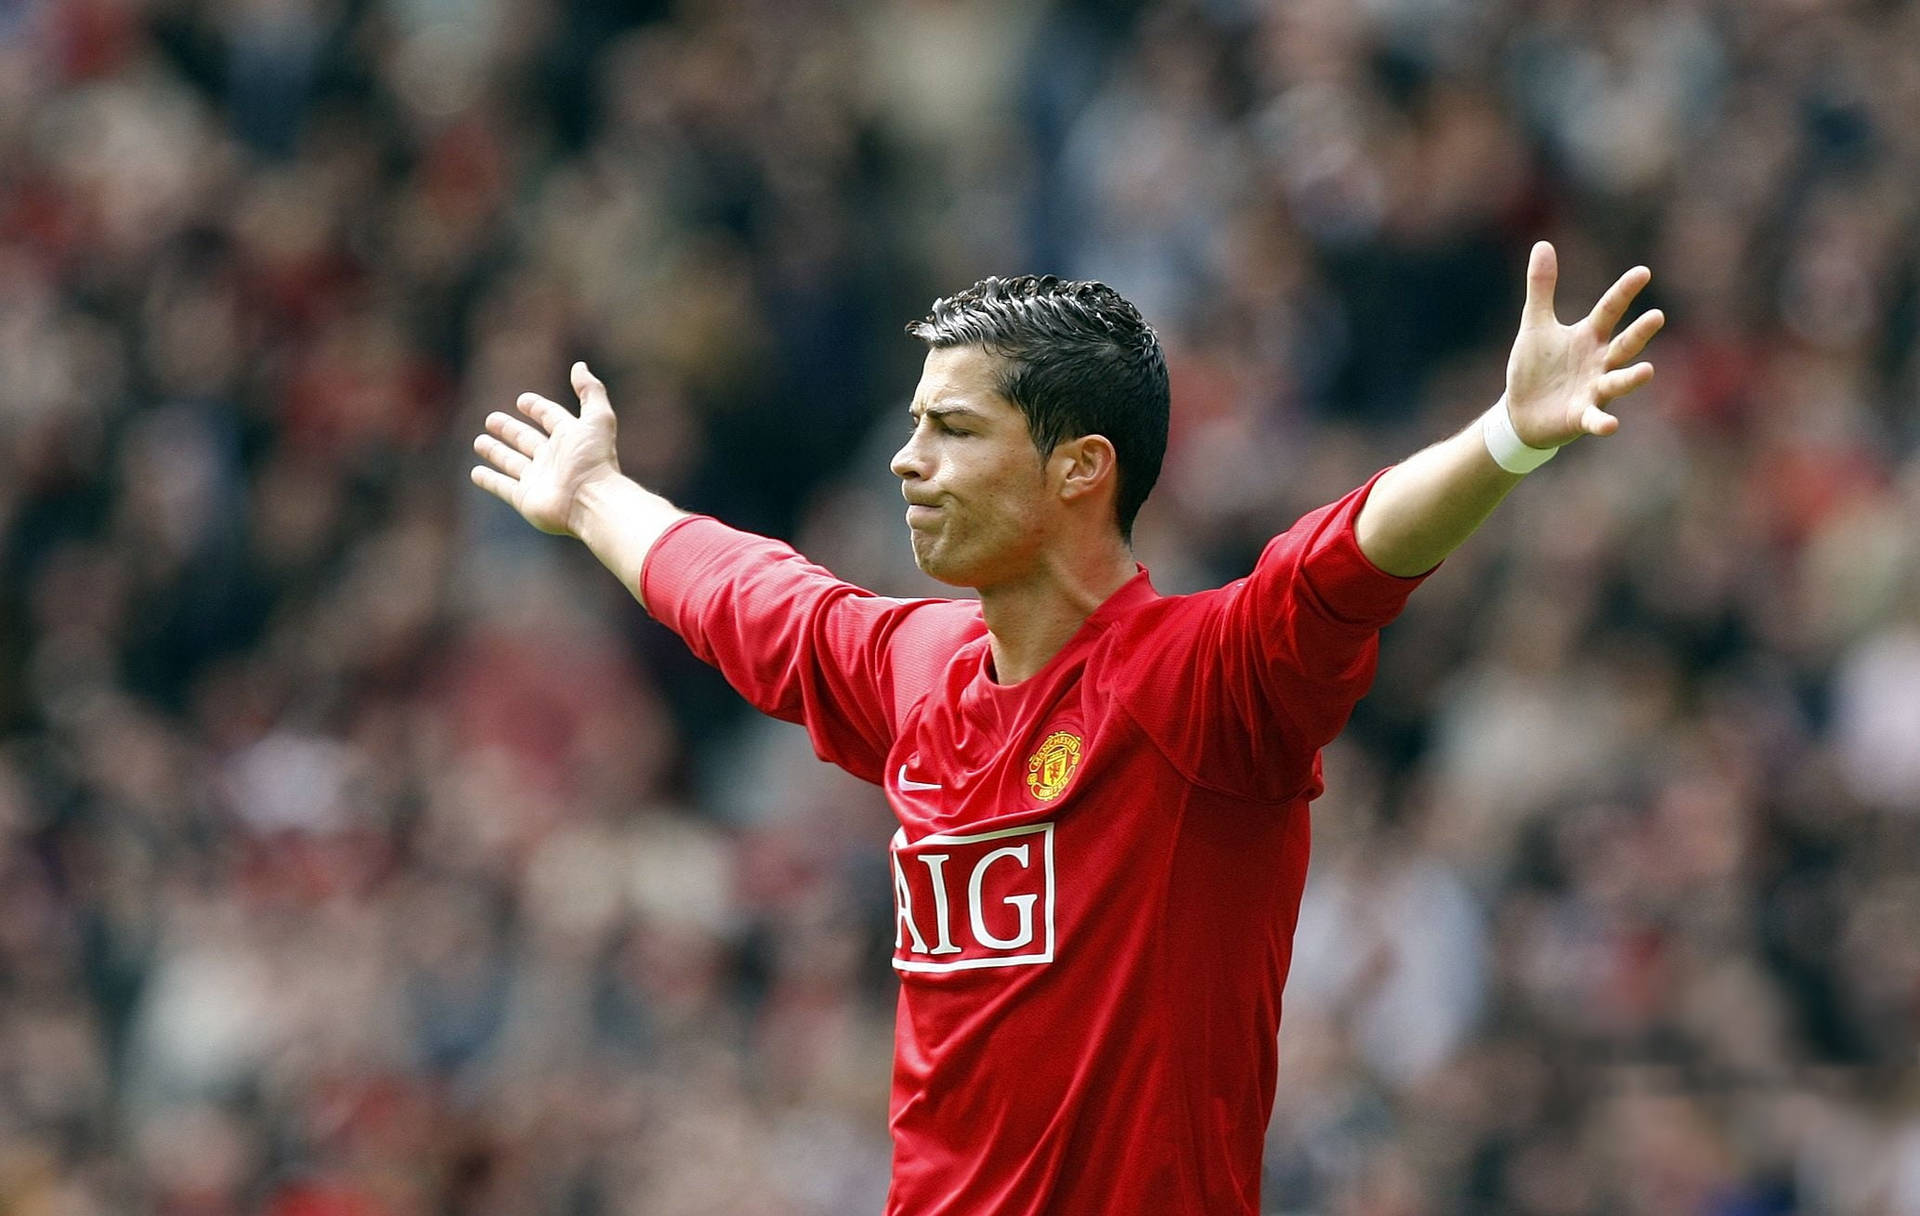 Cristiano Ronaldo Manchester United Hands Up Background